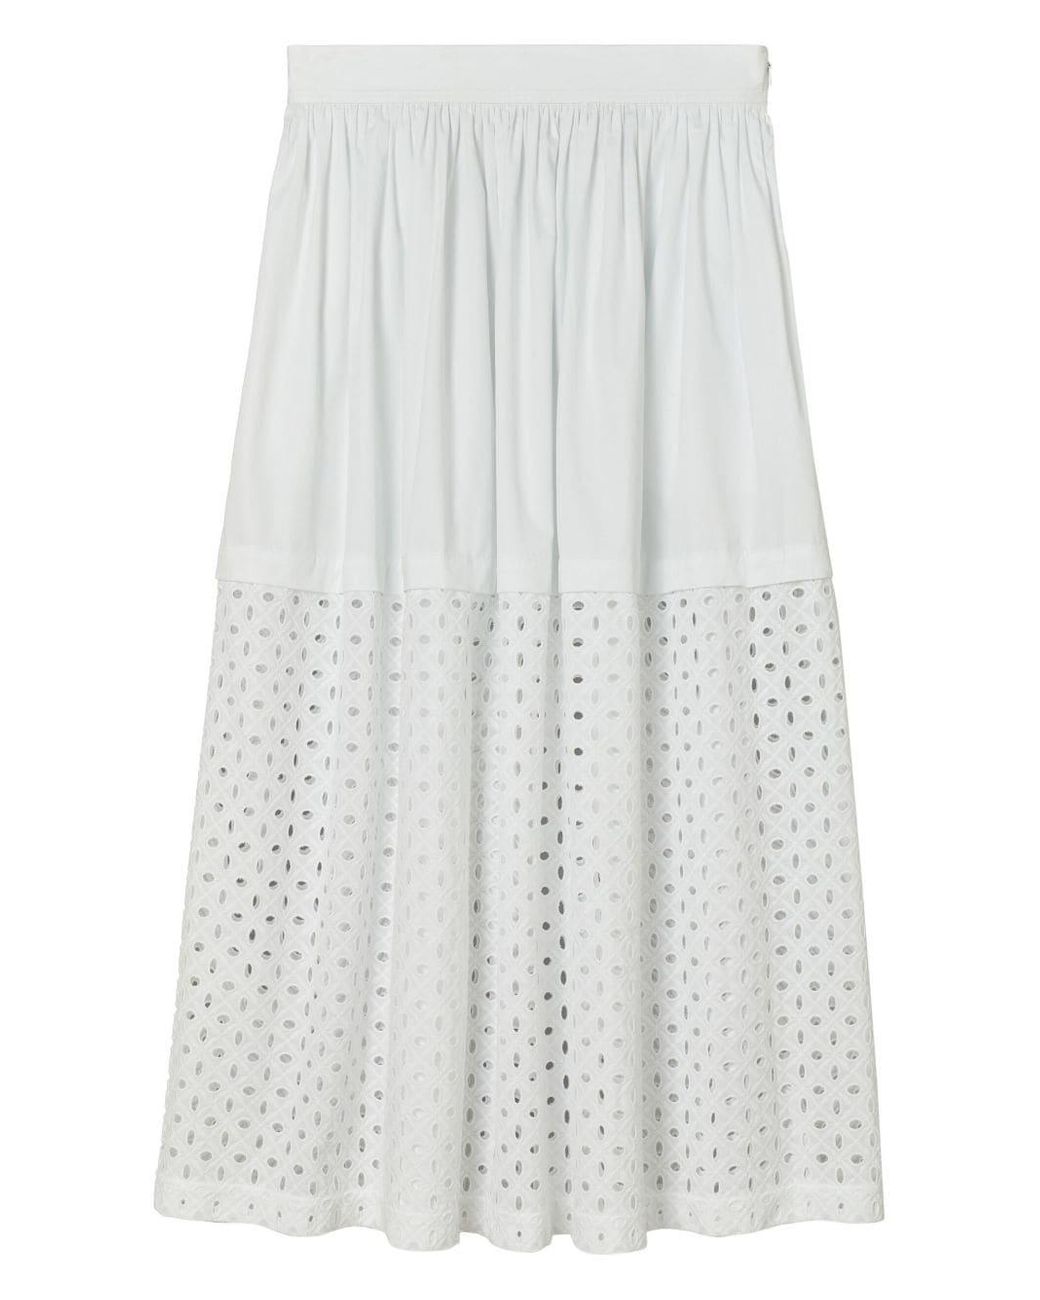 Tory Burch Eyelet Midi Skirt in White | Lyst UK